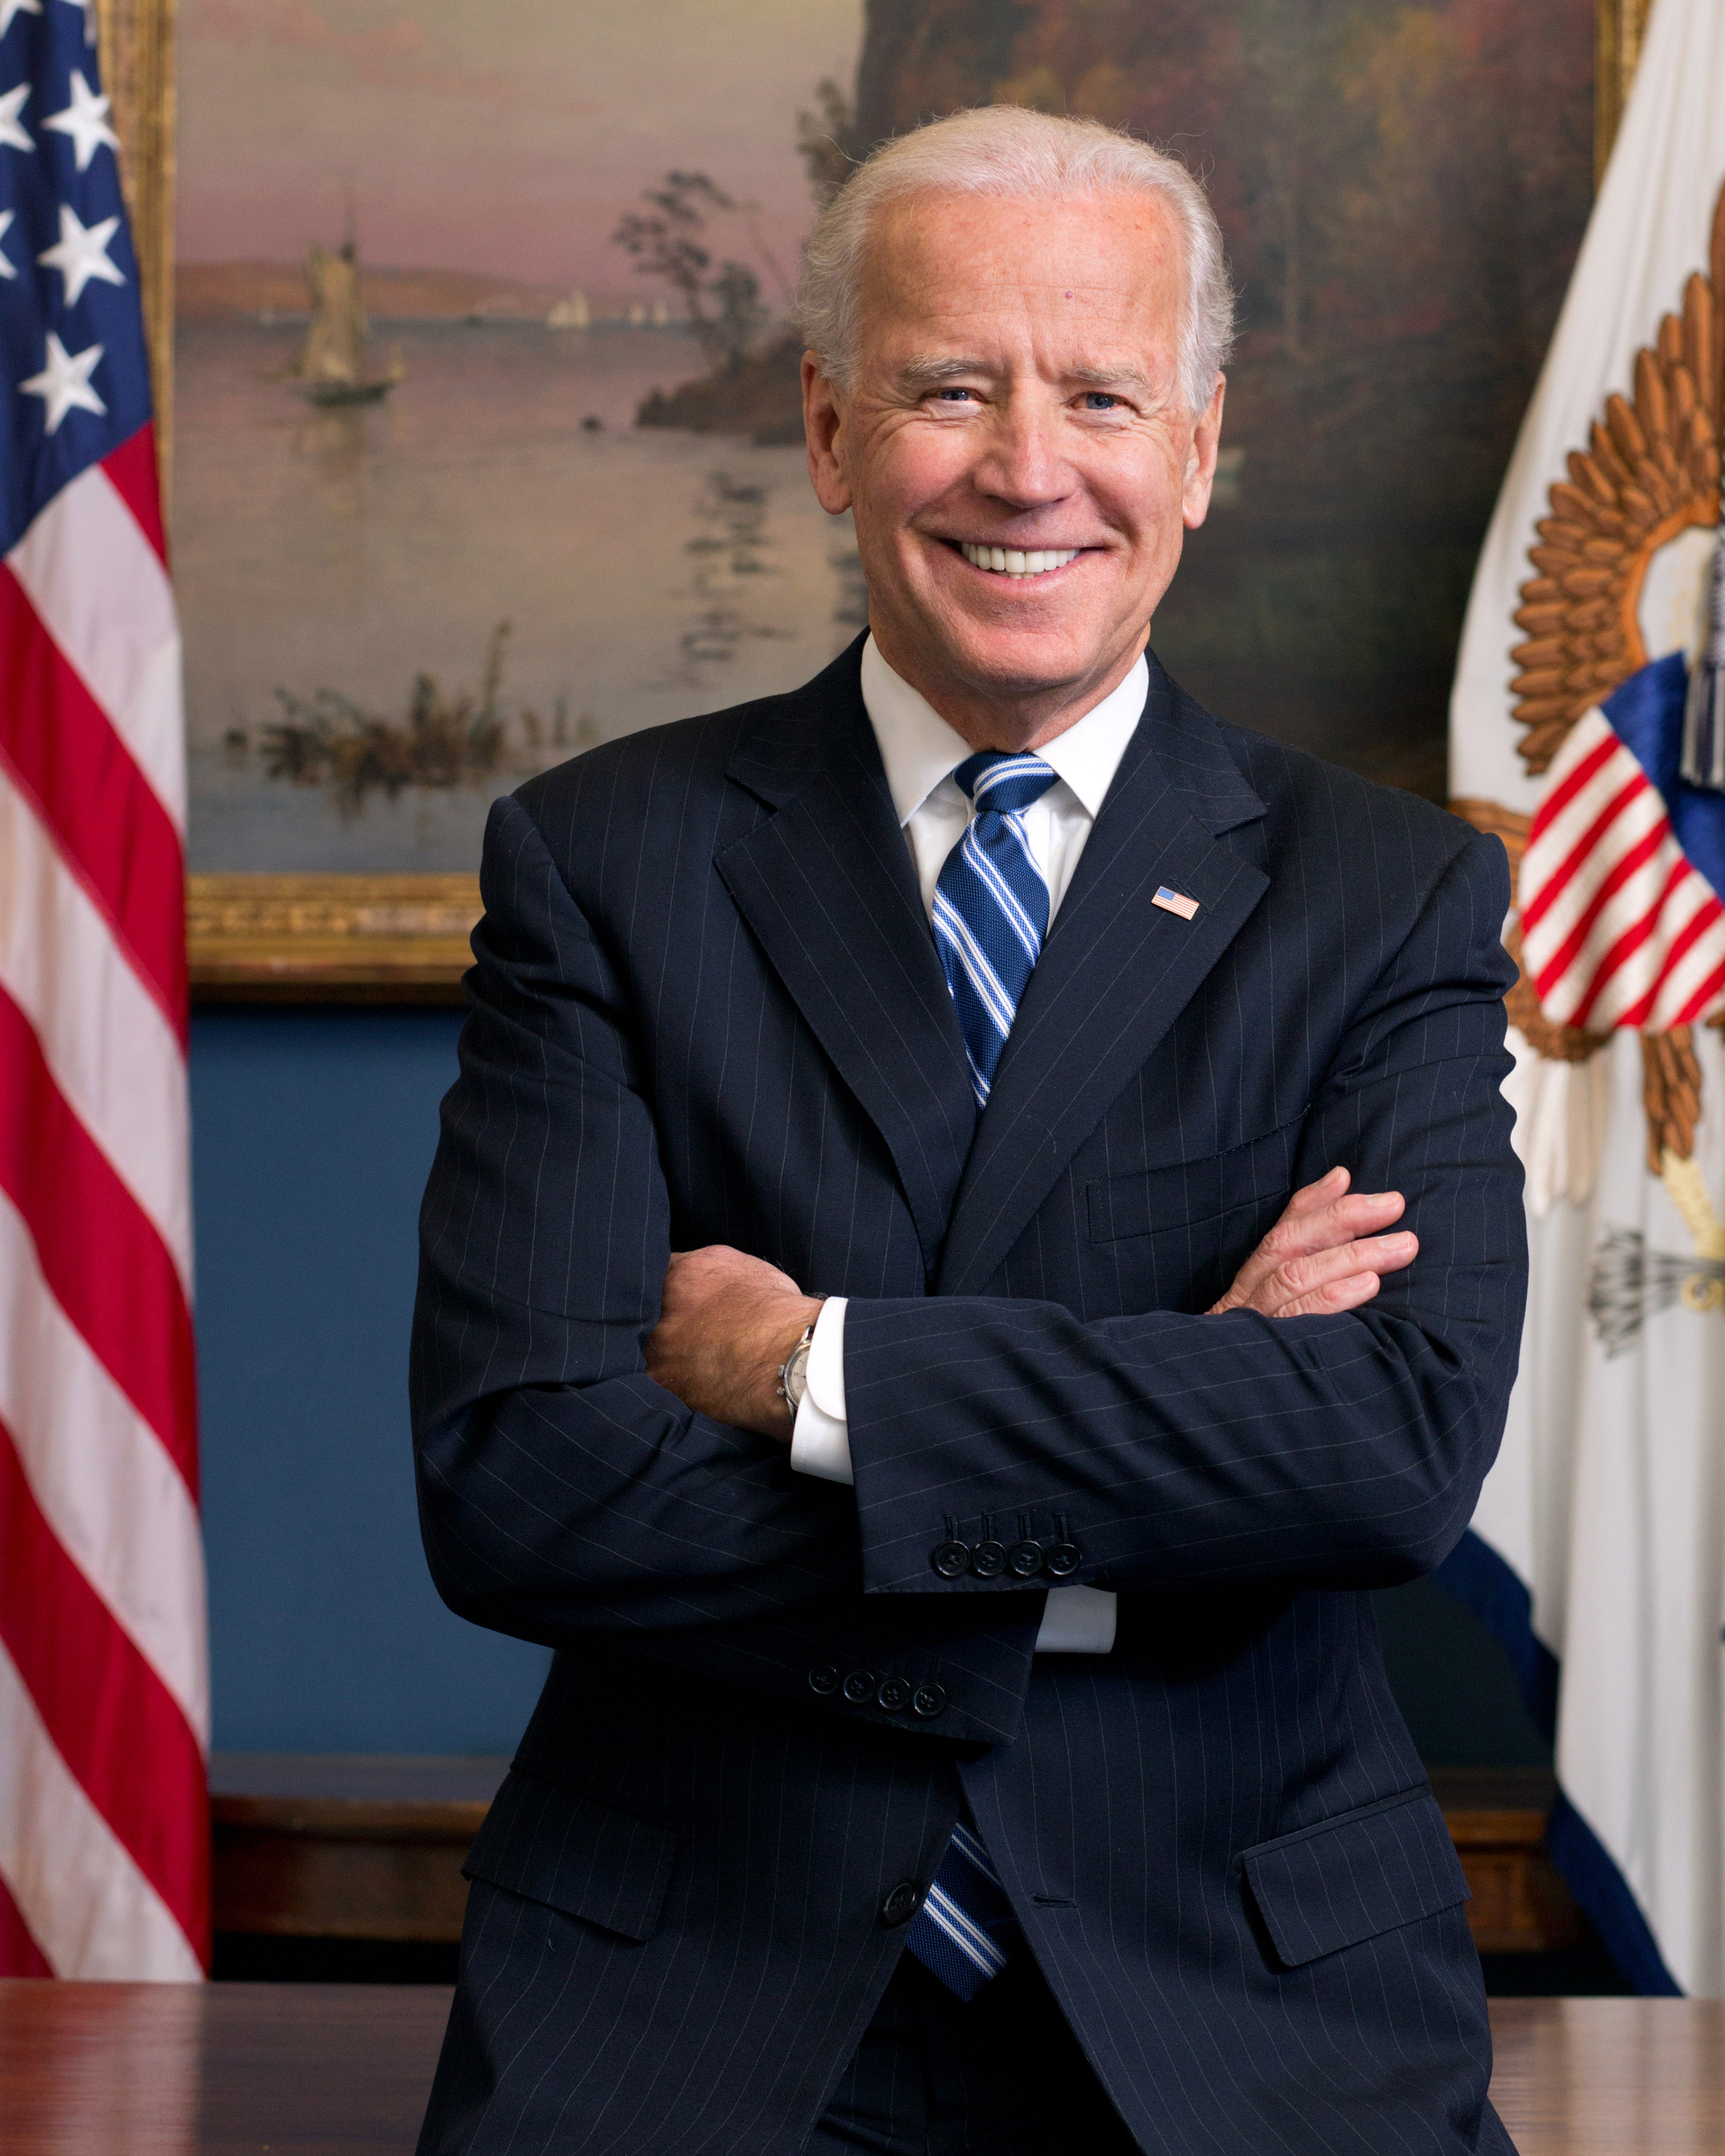 Joe Biden (D-DE)